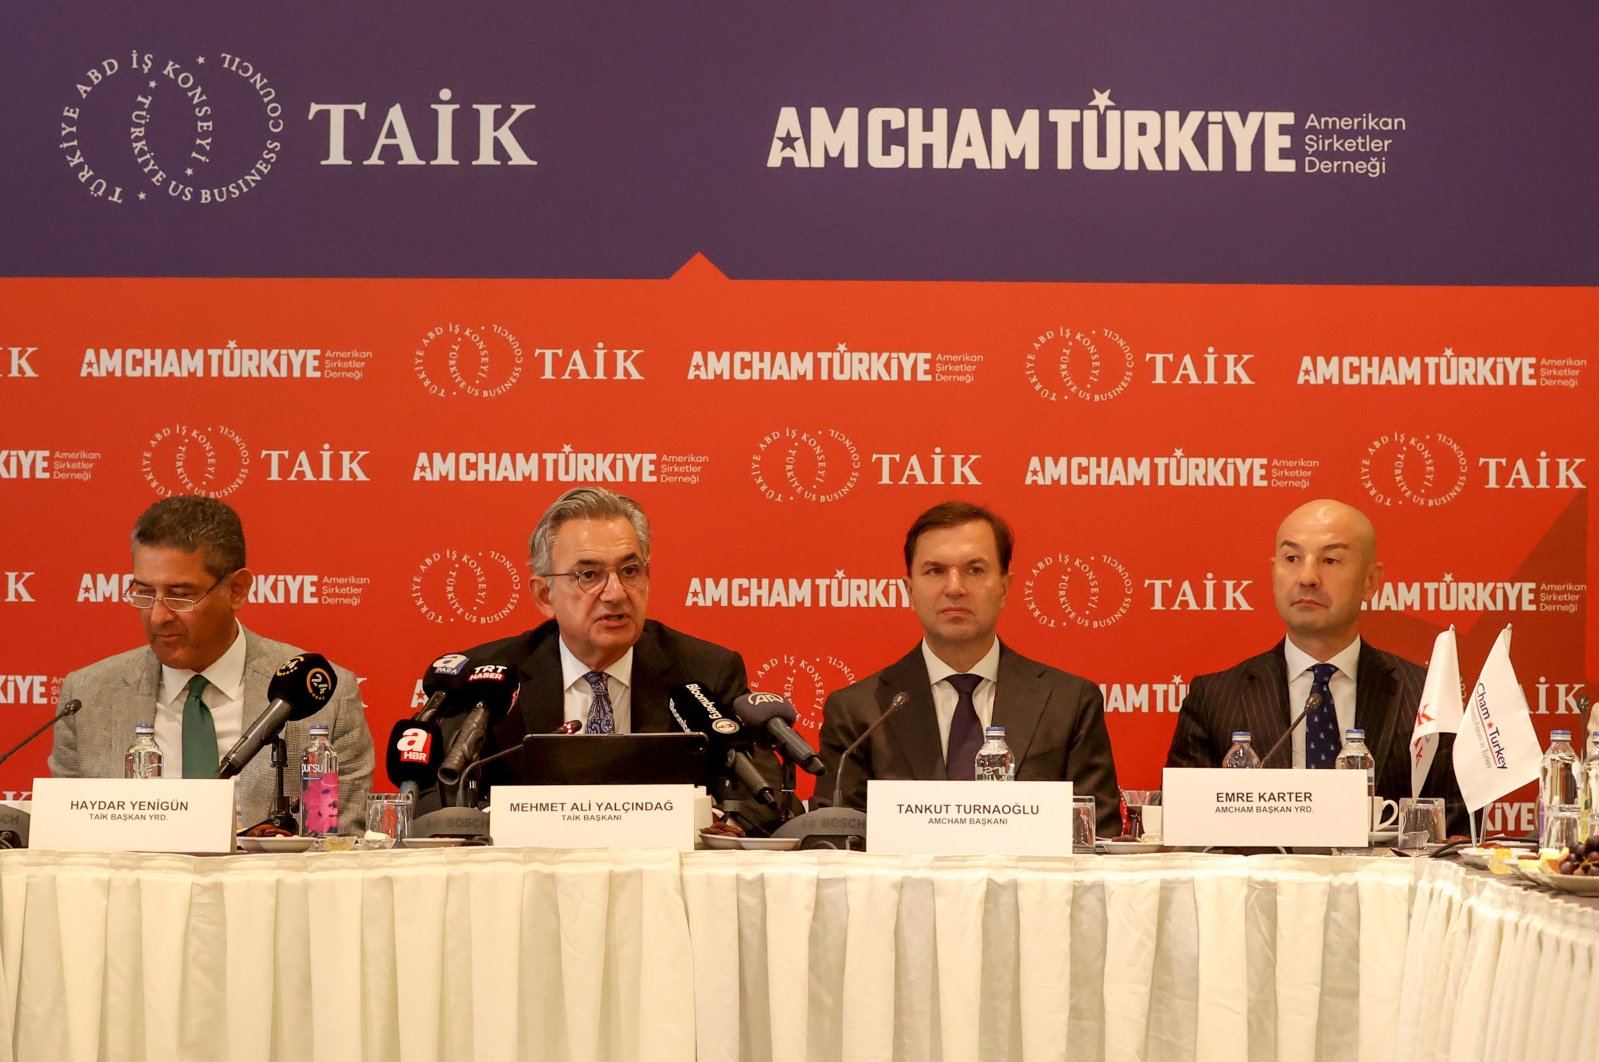 Türkiye, US forge path toward ‘new era’ in trade relations